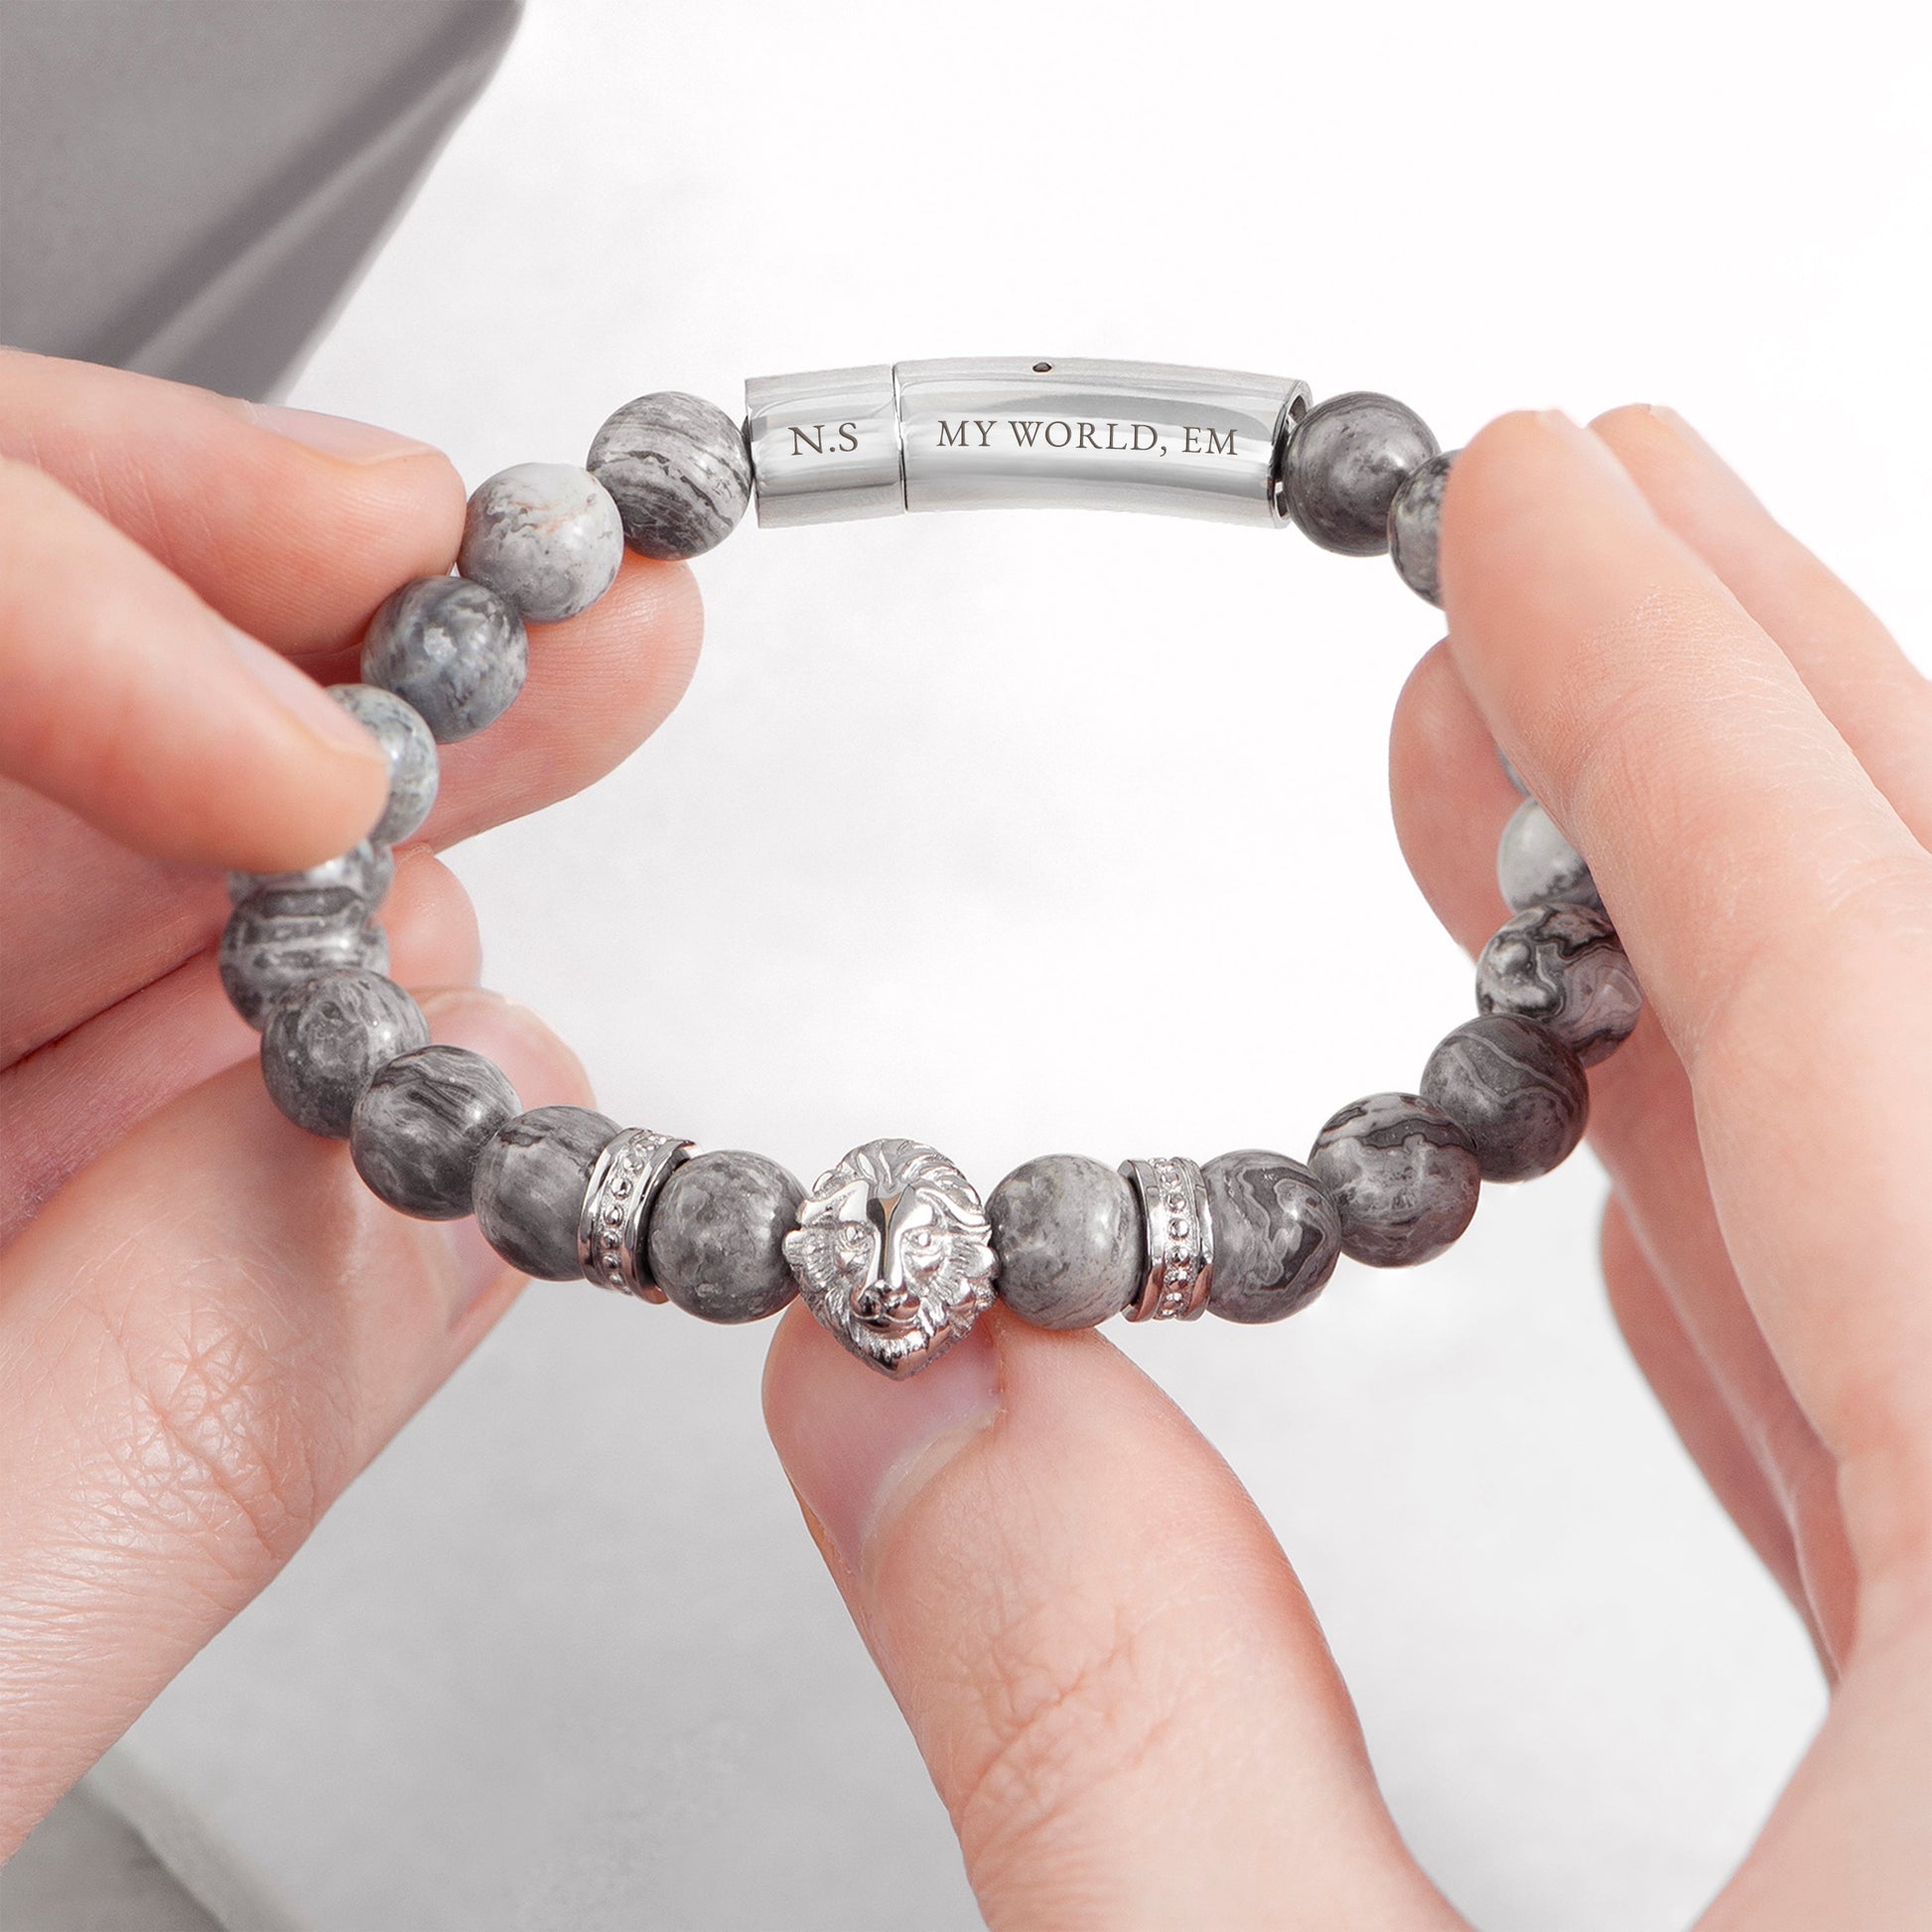 Personalized Men's Bracelets - Personalized Men's Silver Lion Jasper Stone Bracelet 